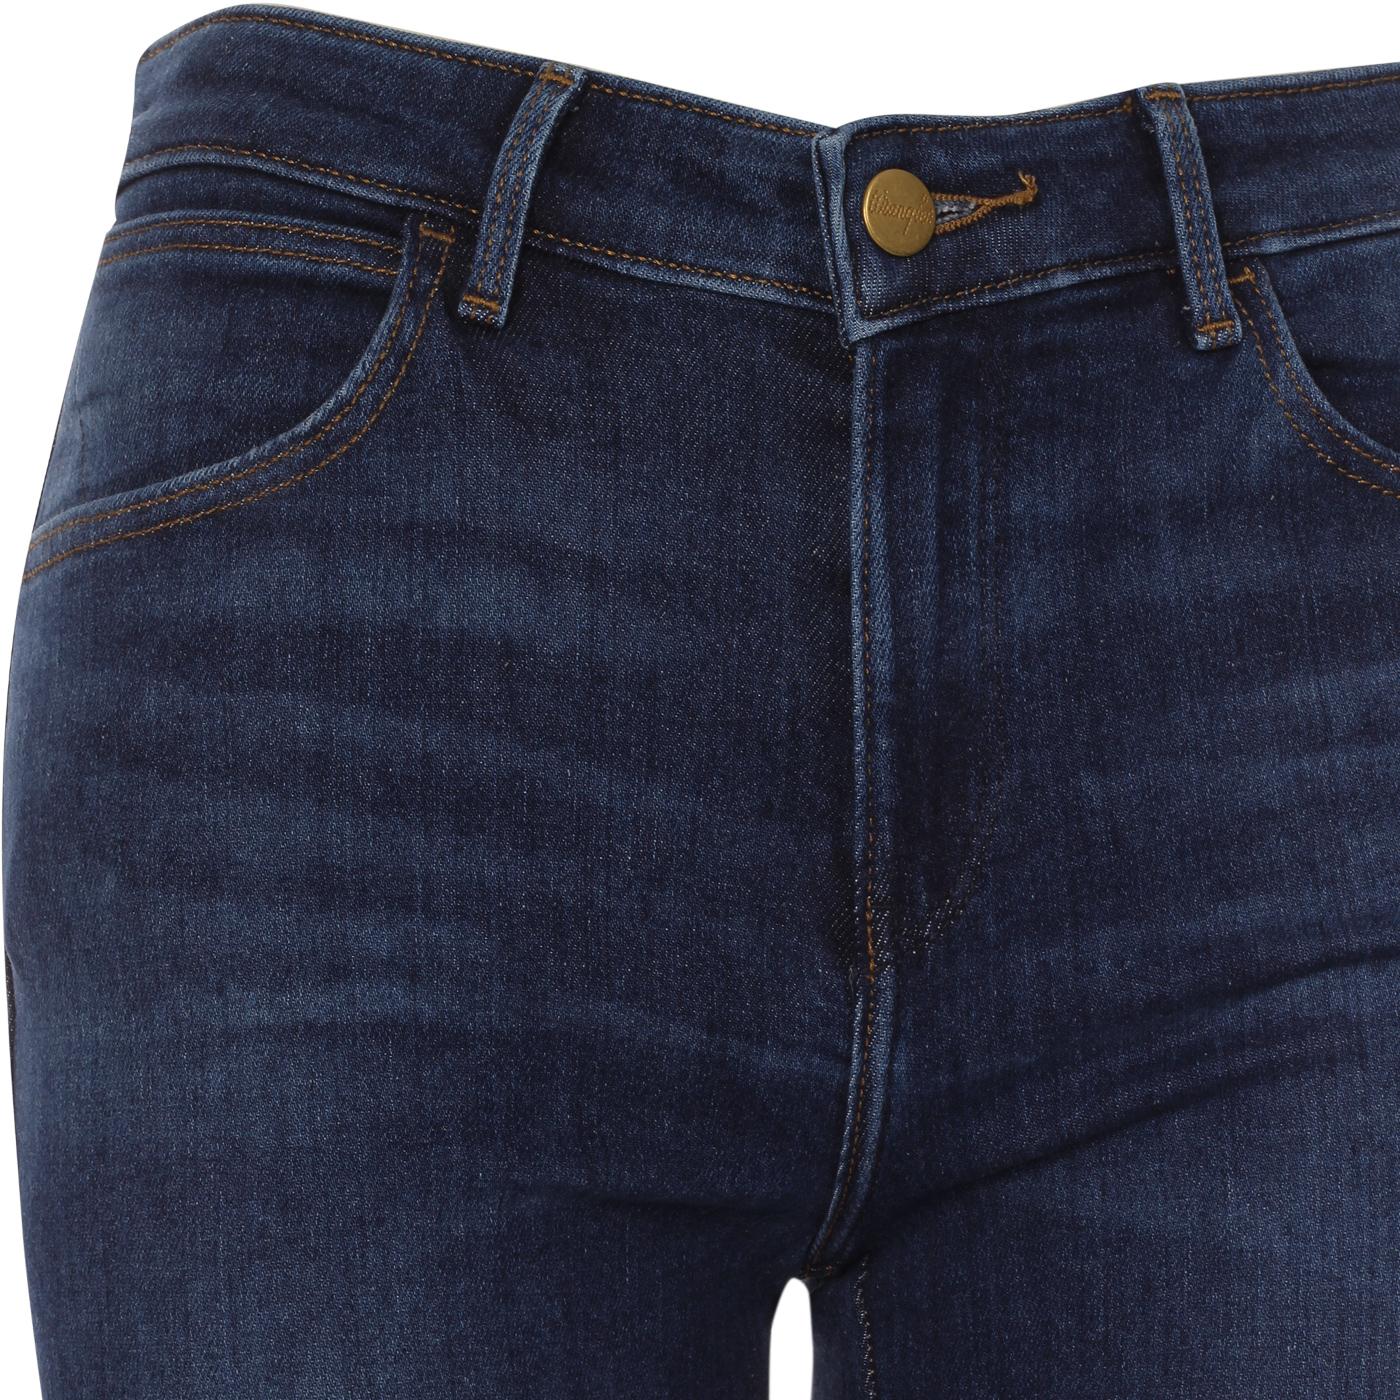 WRANGLER Women's Retro Bootcut Jeans in Authentic Love